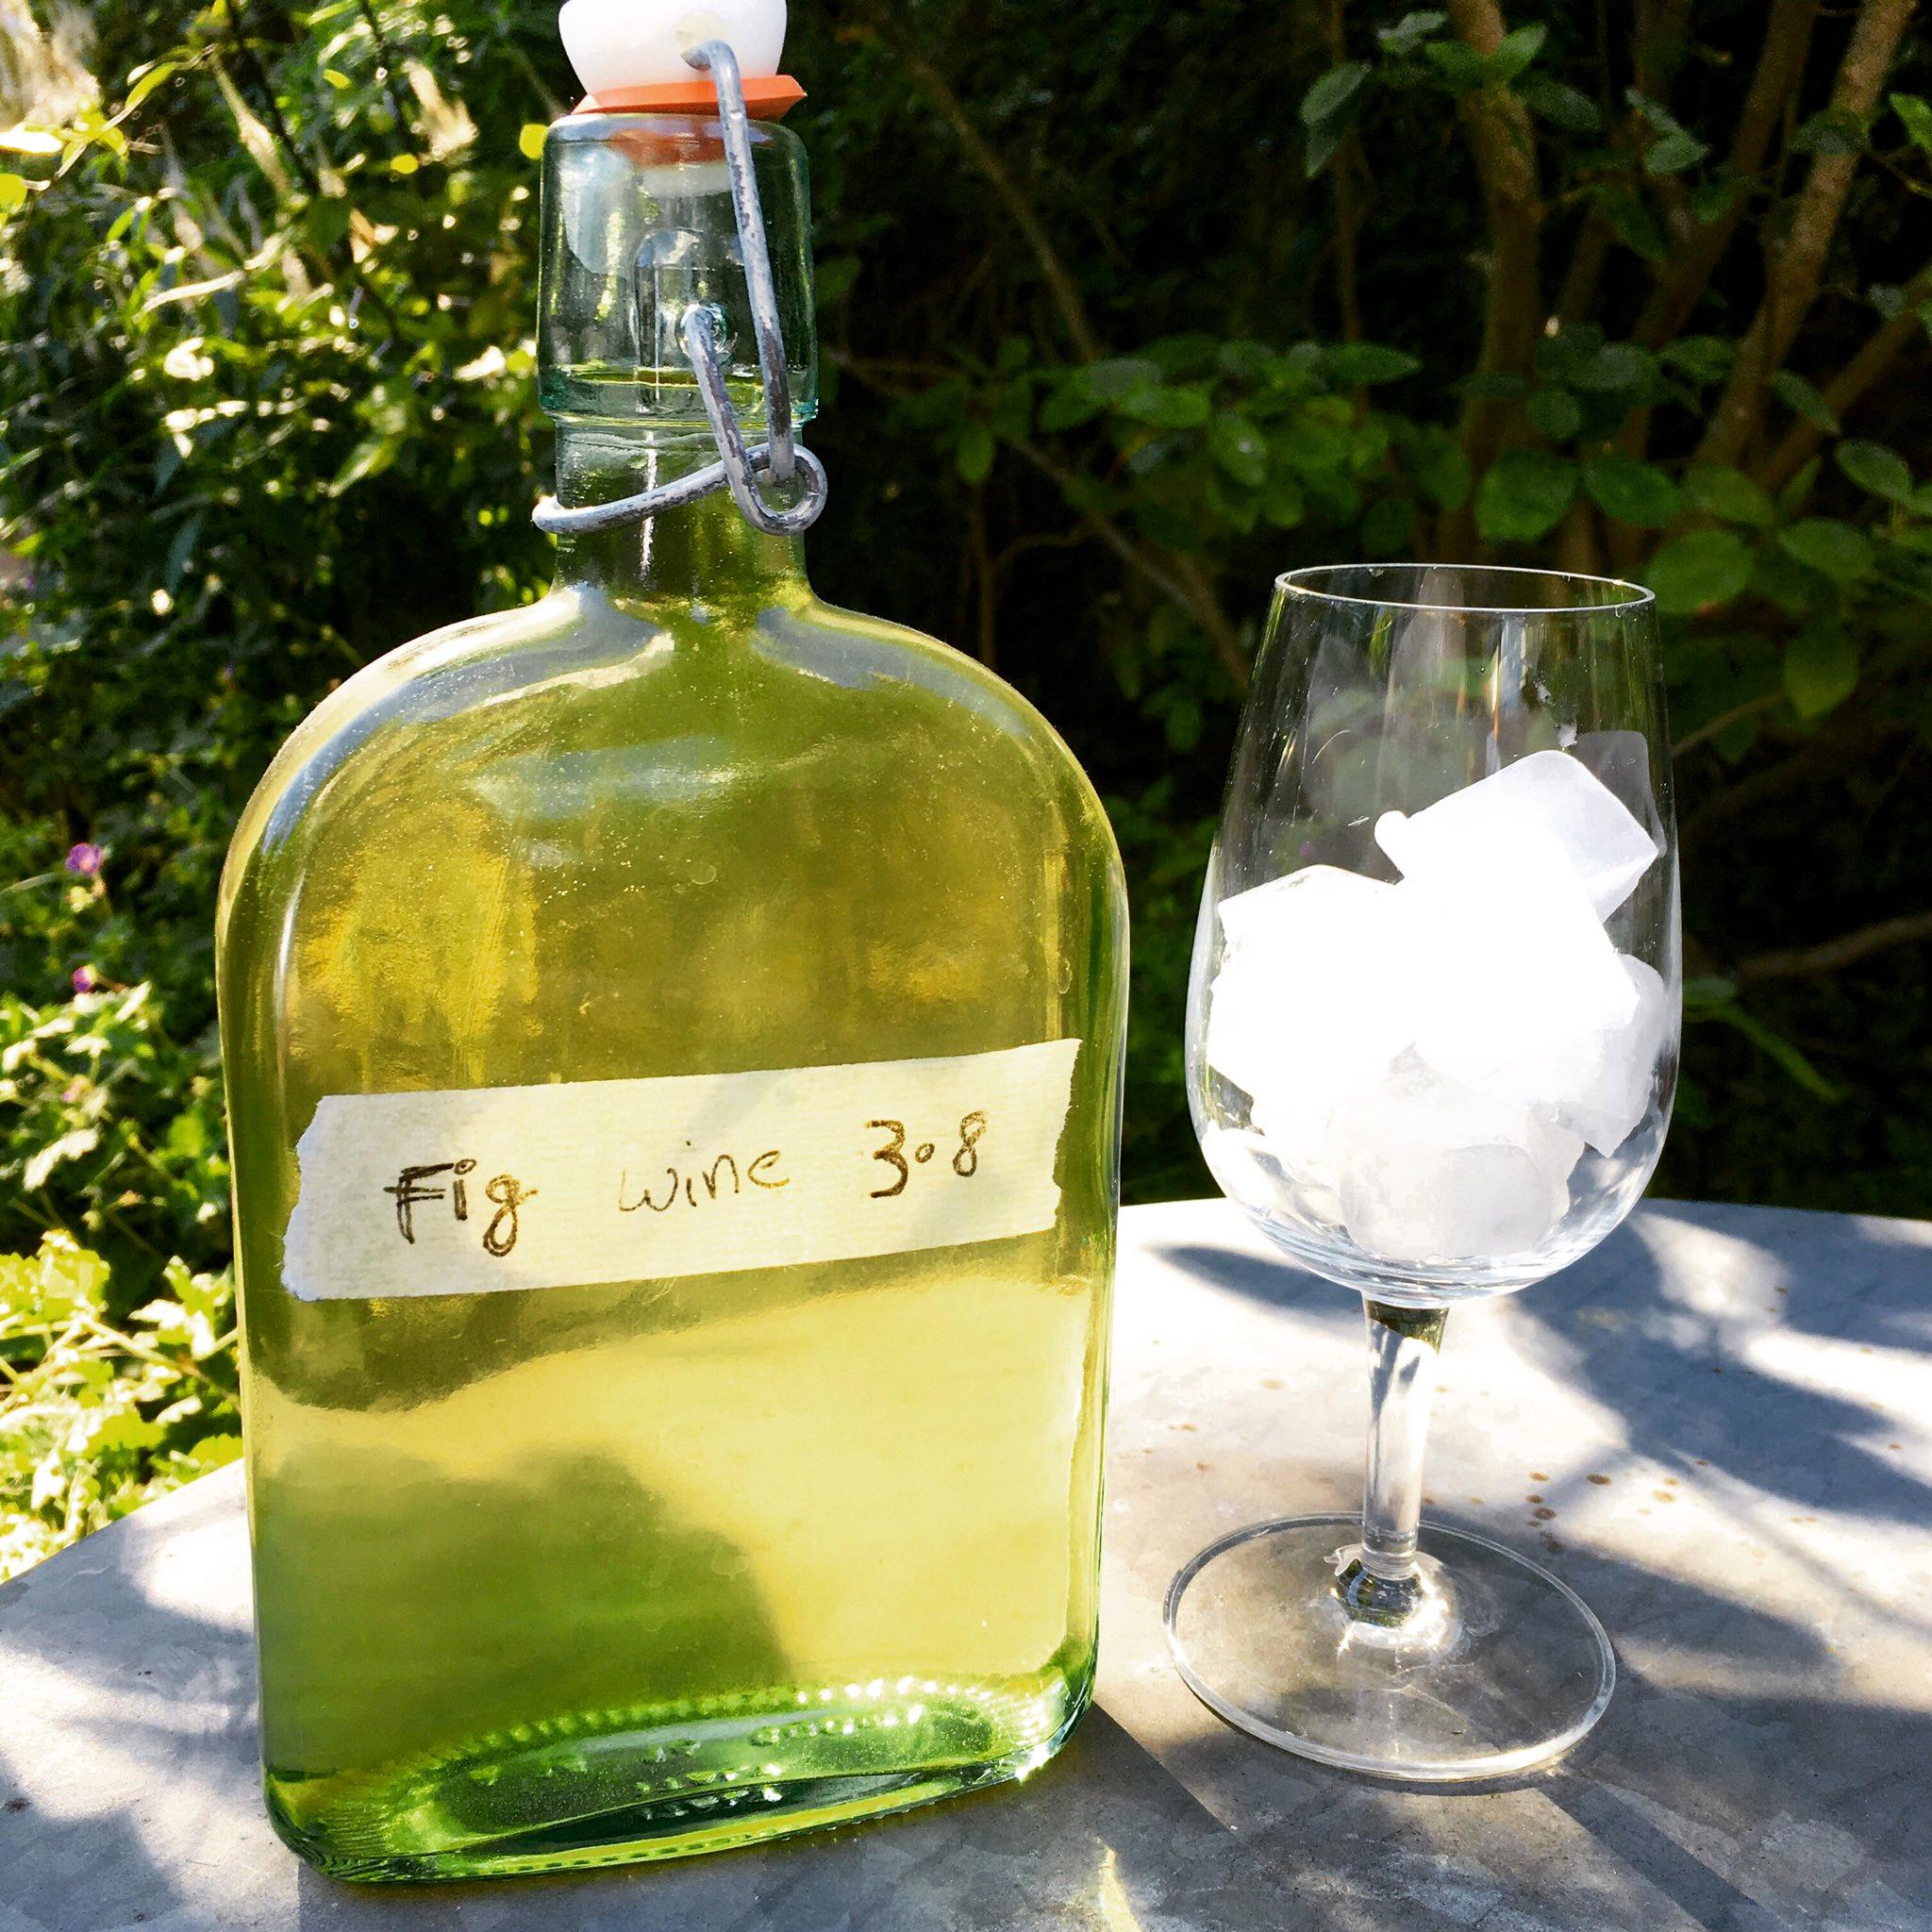 fig wine recipe